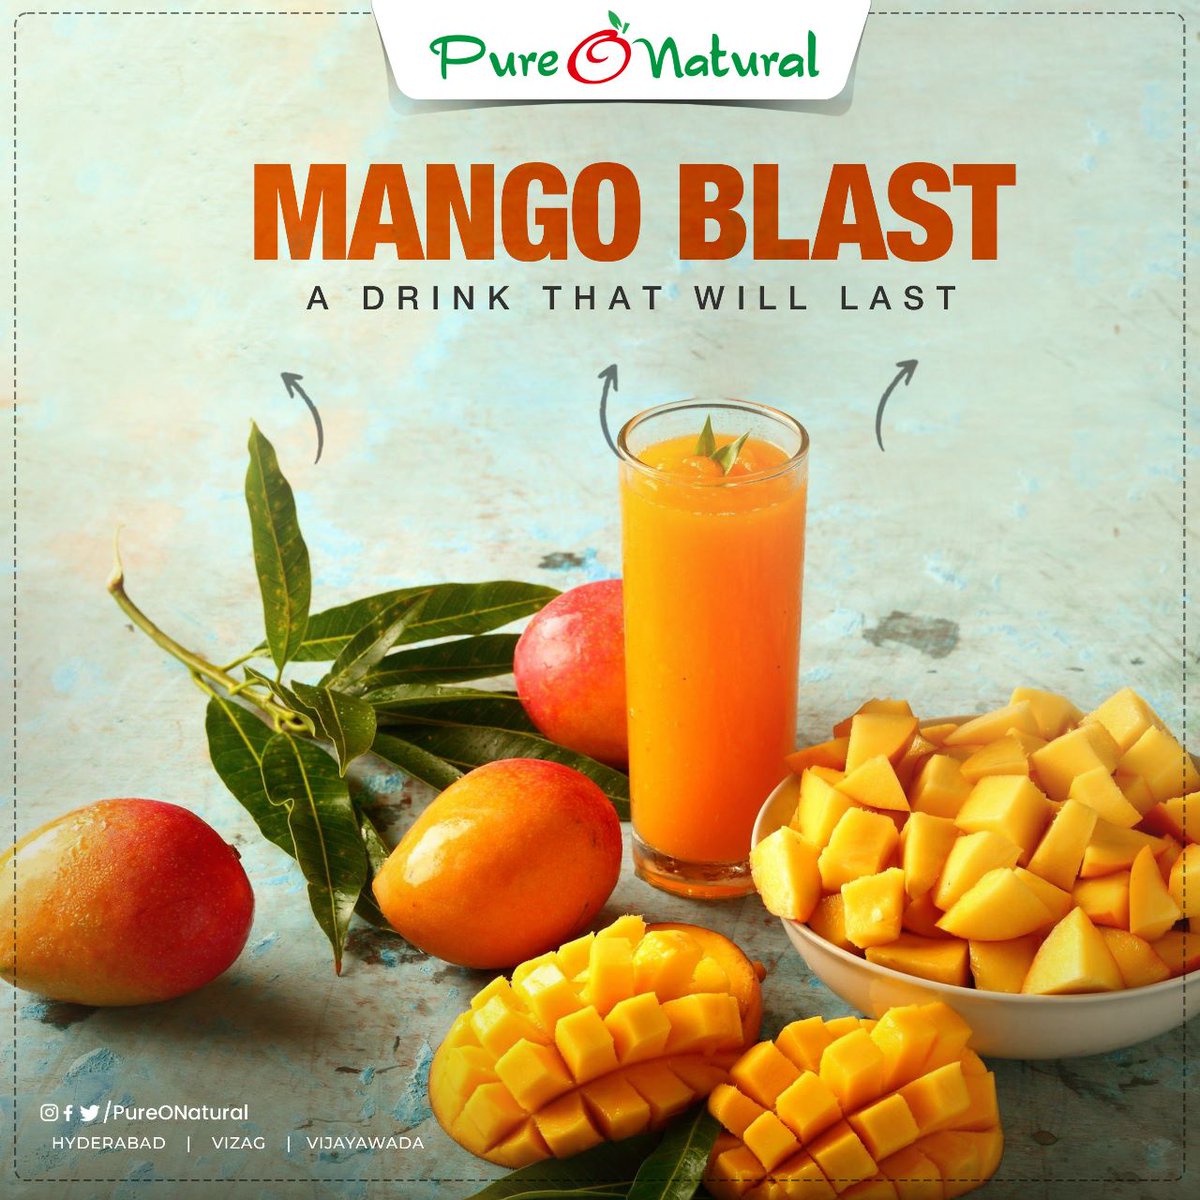 Mango Blast all Summer! 🏖️ 🥭

#MangoSeason #MangoLove #MangoLovers  #PureONatural #Hyderabad #Vizag #Vijaywada #FreshFruits #FruitJuice #FruityFun #MangoJuice